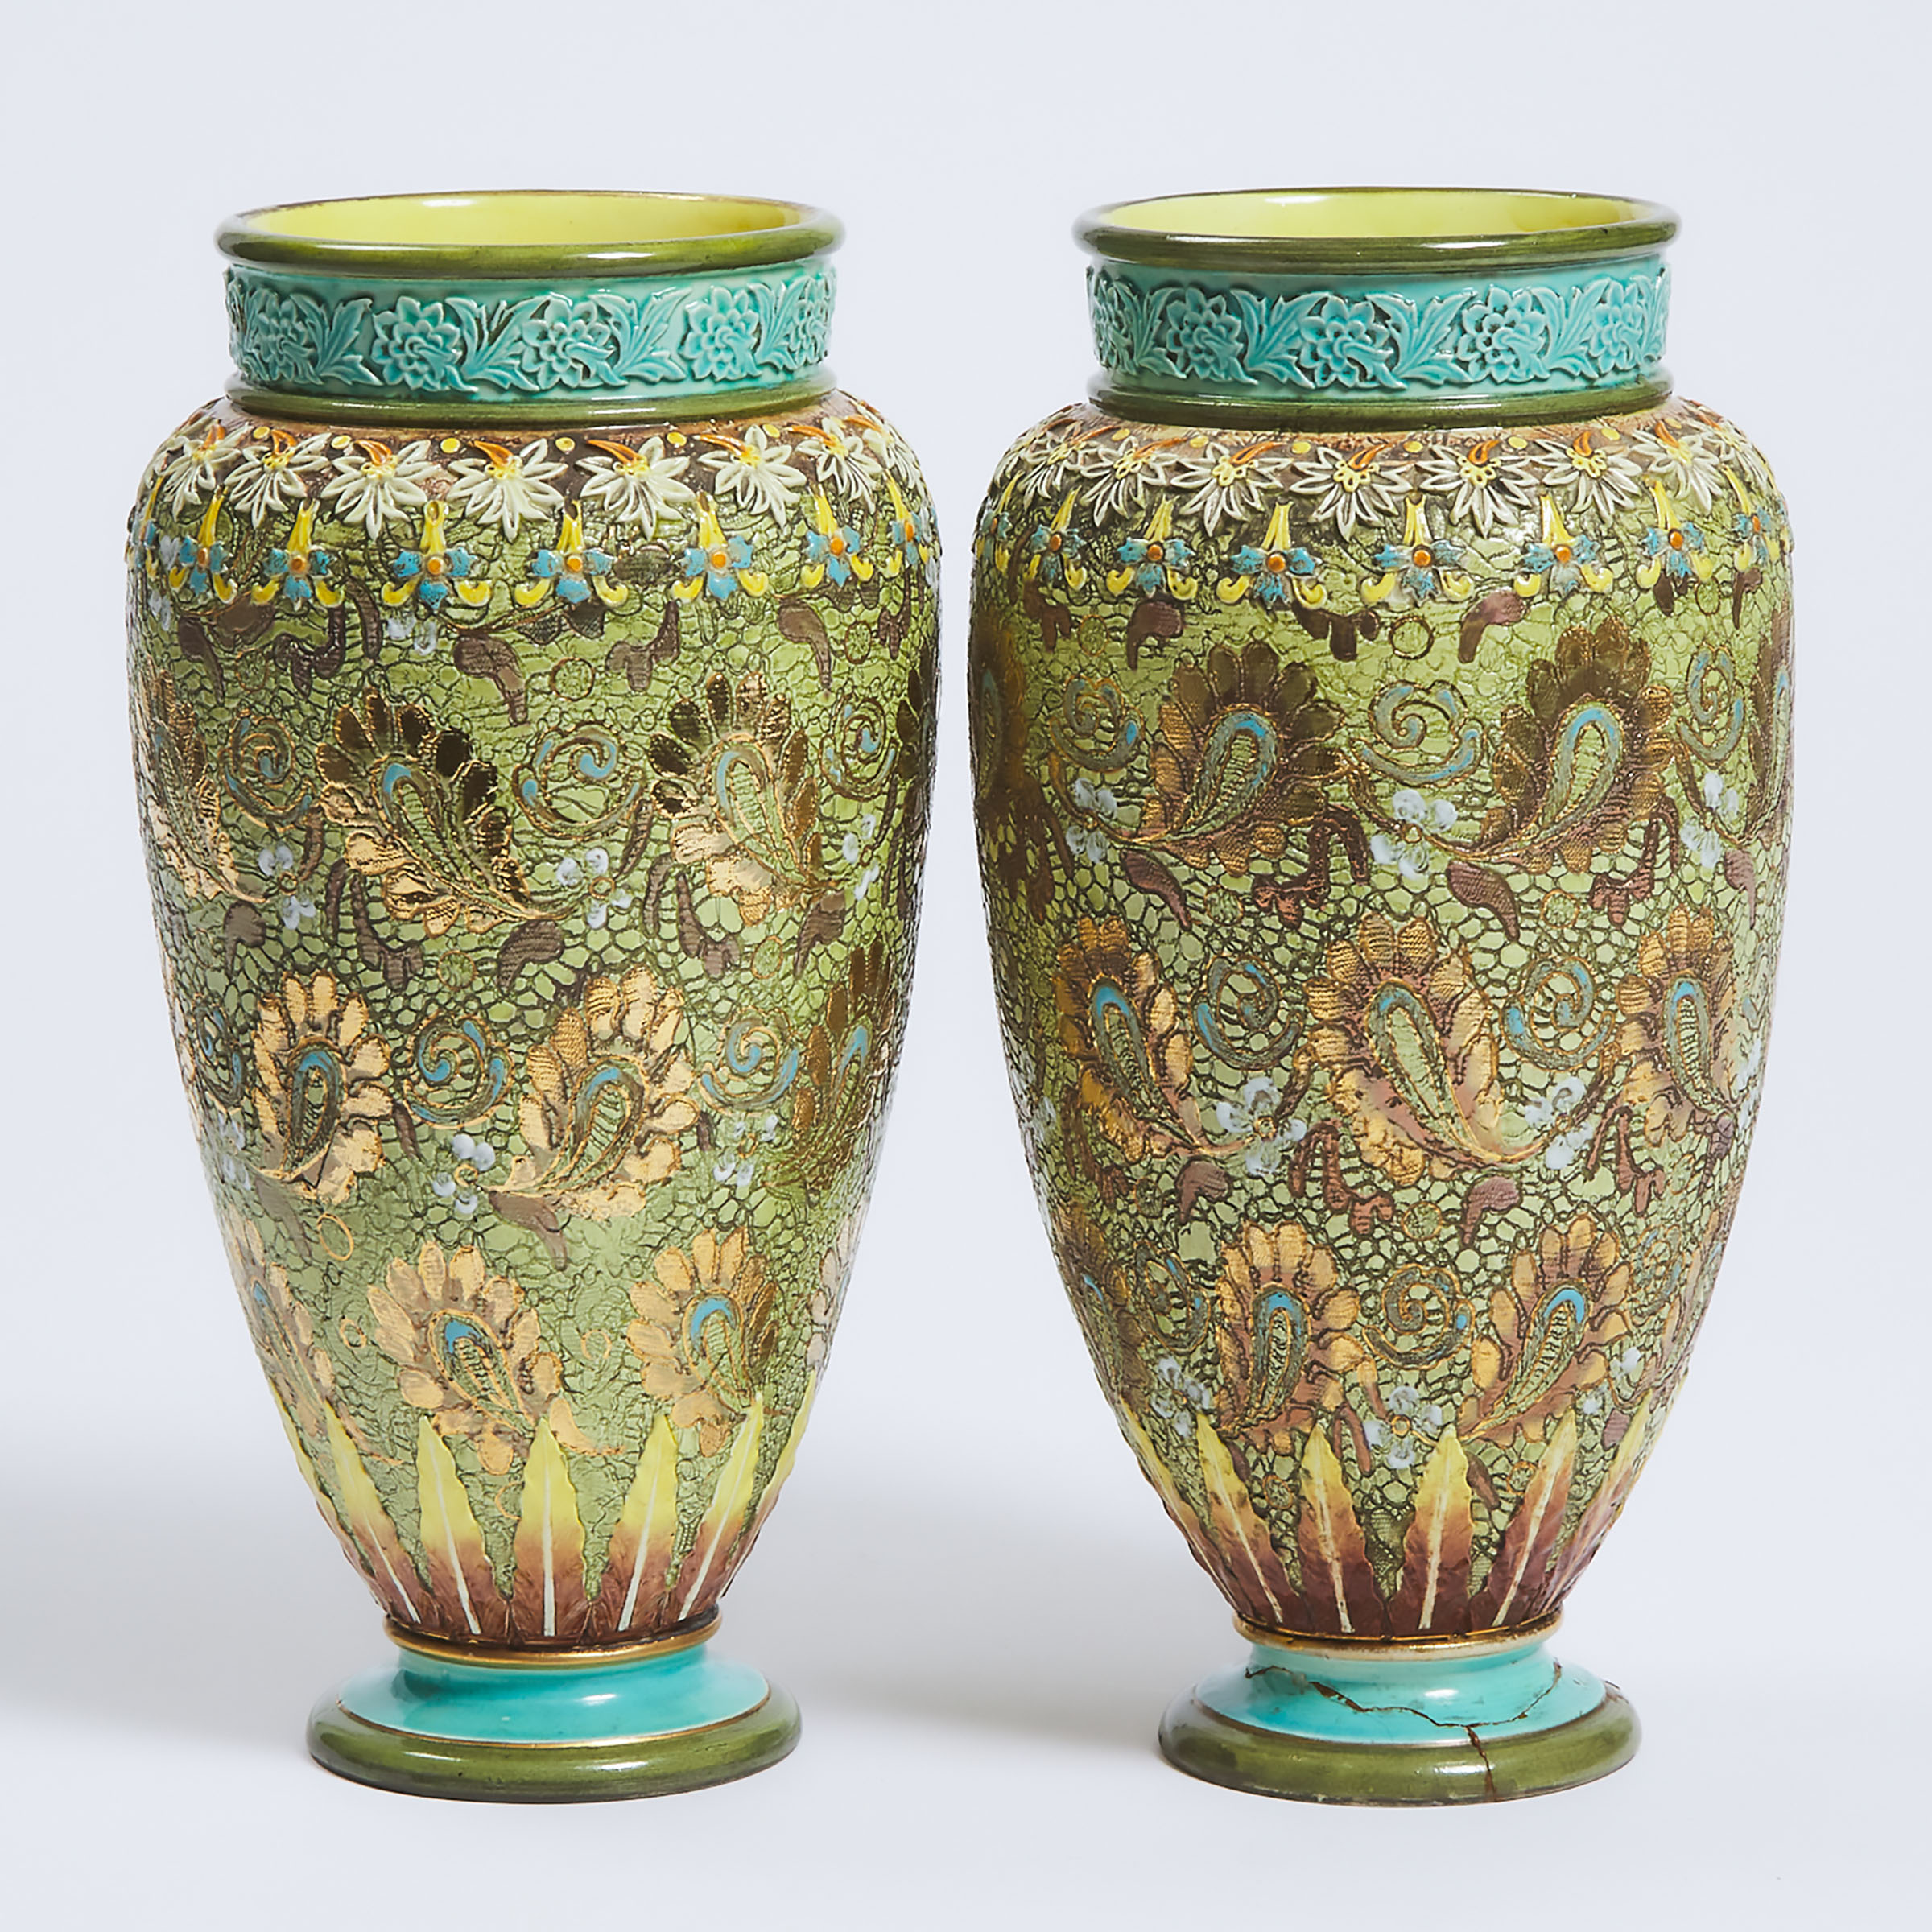 Pair of Doulton Lambeth 'Doulton & Slater's Patent' Faience Vases, c.1885